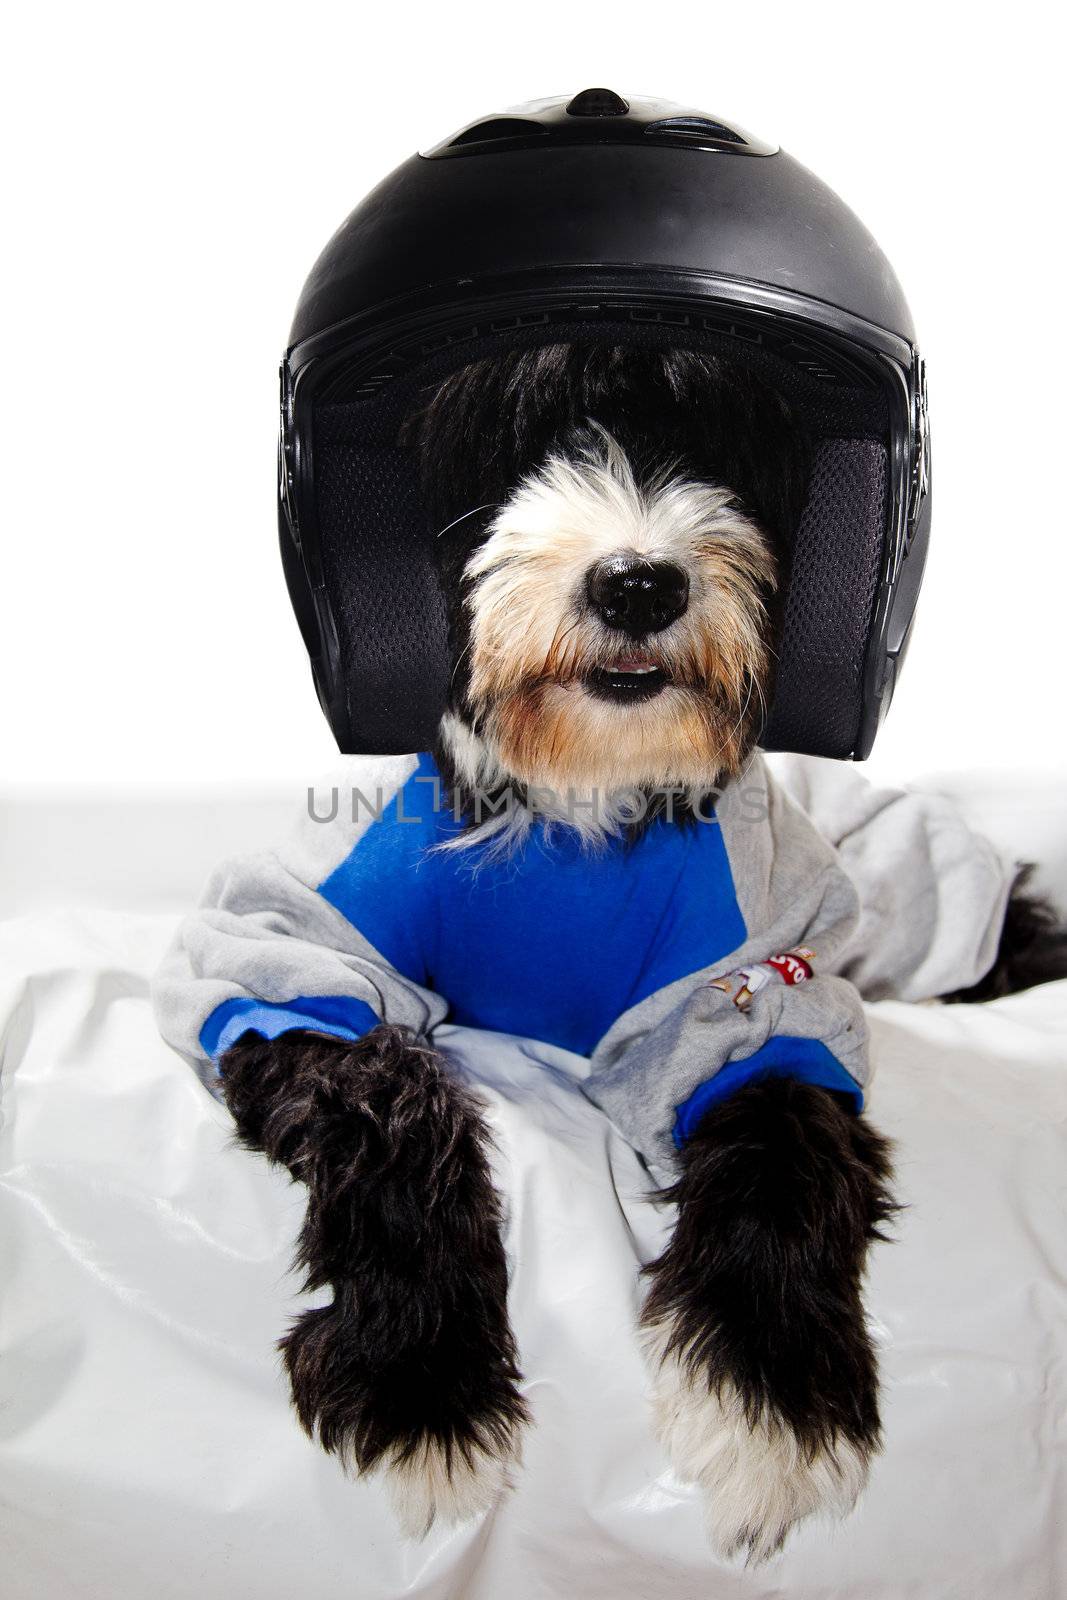 a happy black dog race driver suit and helmet